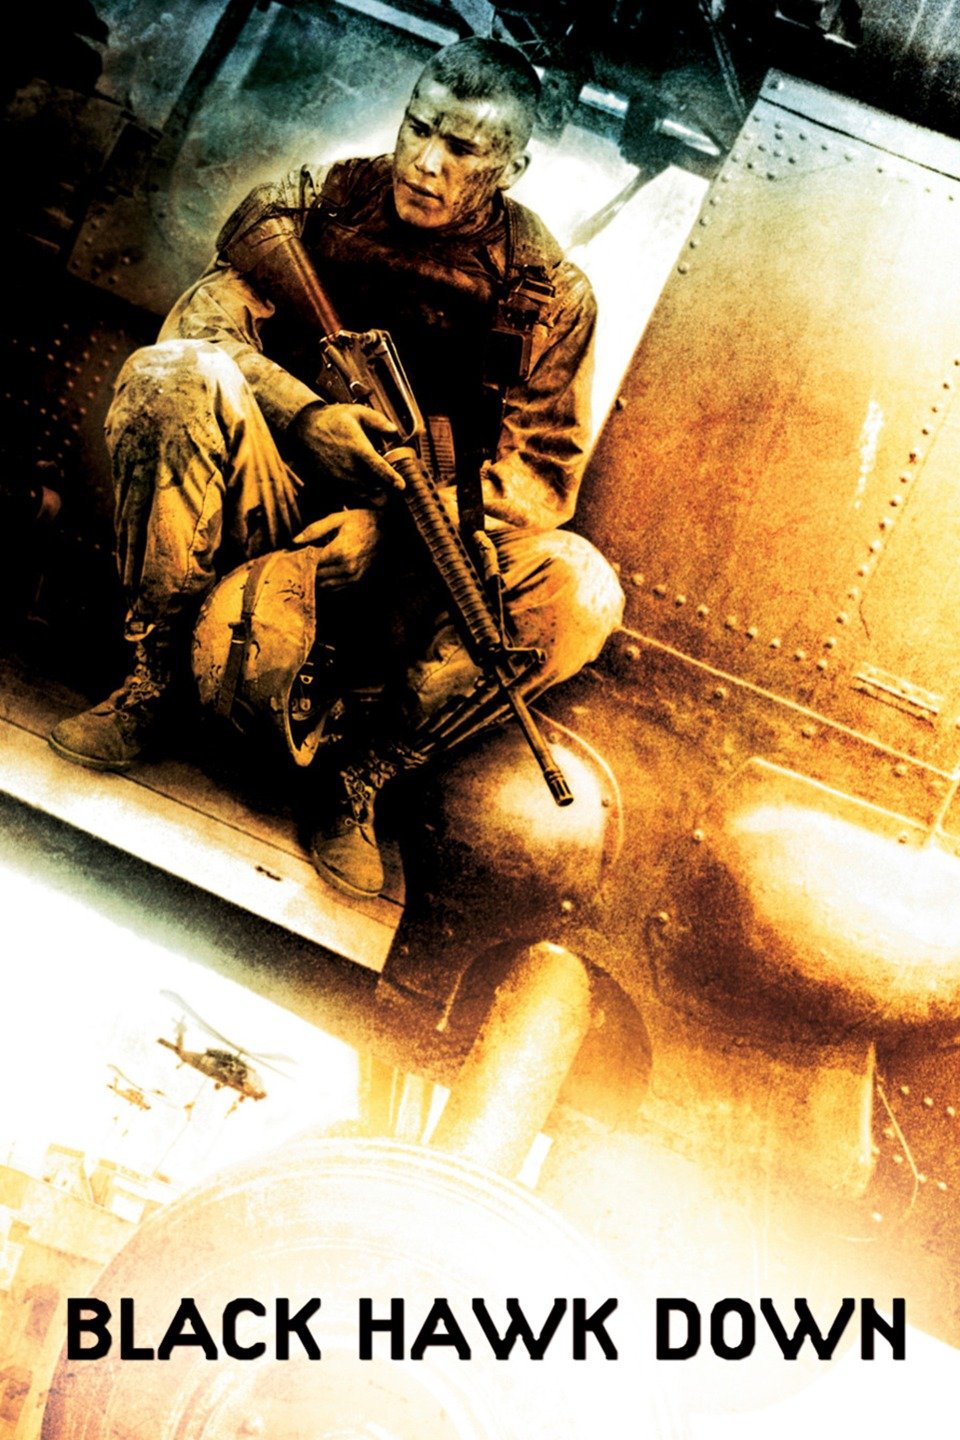 [MINI Super-HQ] Black Hawk Down (2001) ยุทธการฝ่ารหัสทมิฬ [Extend Edtion] [1080p] [พากย์ไทย 5.1 + เสียงอังกฤษ DTS] [บรรยายไทย + อังกฤษ] [เสียงไทย + ซับไทย] [ONE2UP]